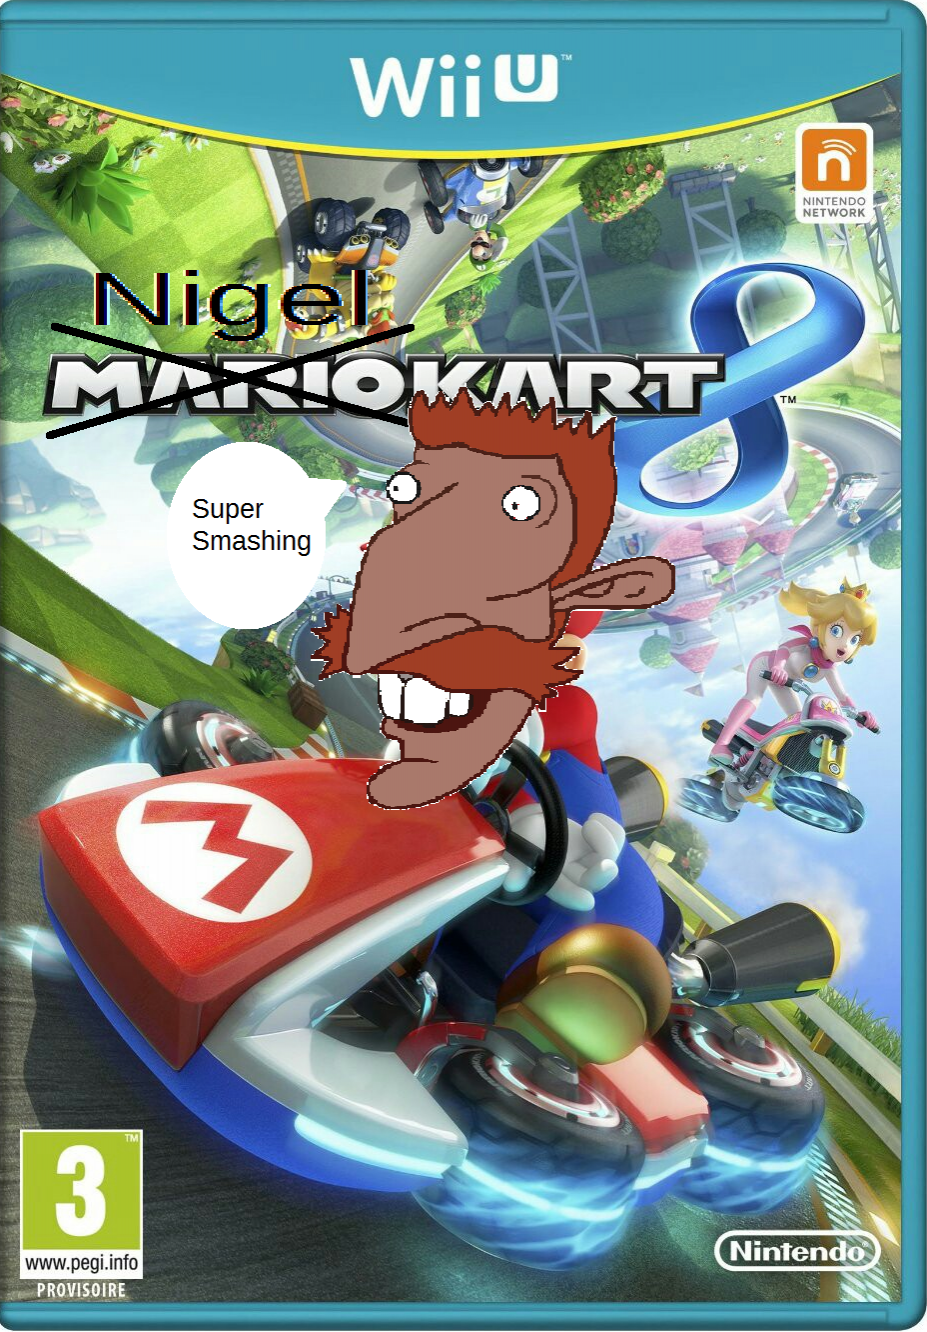 Nigel Kart 8 box cover